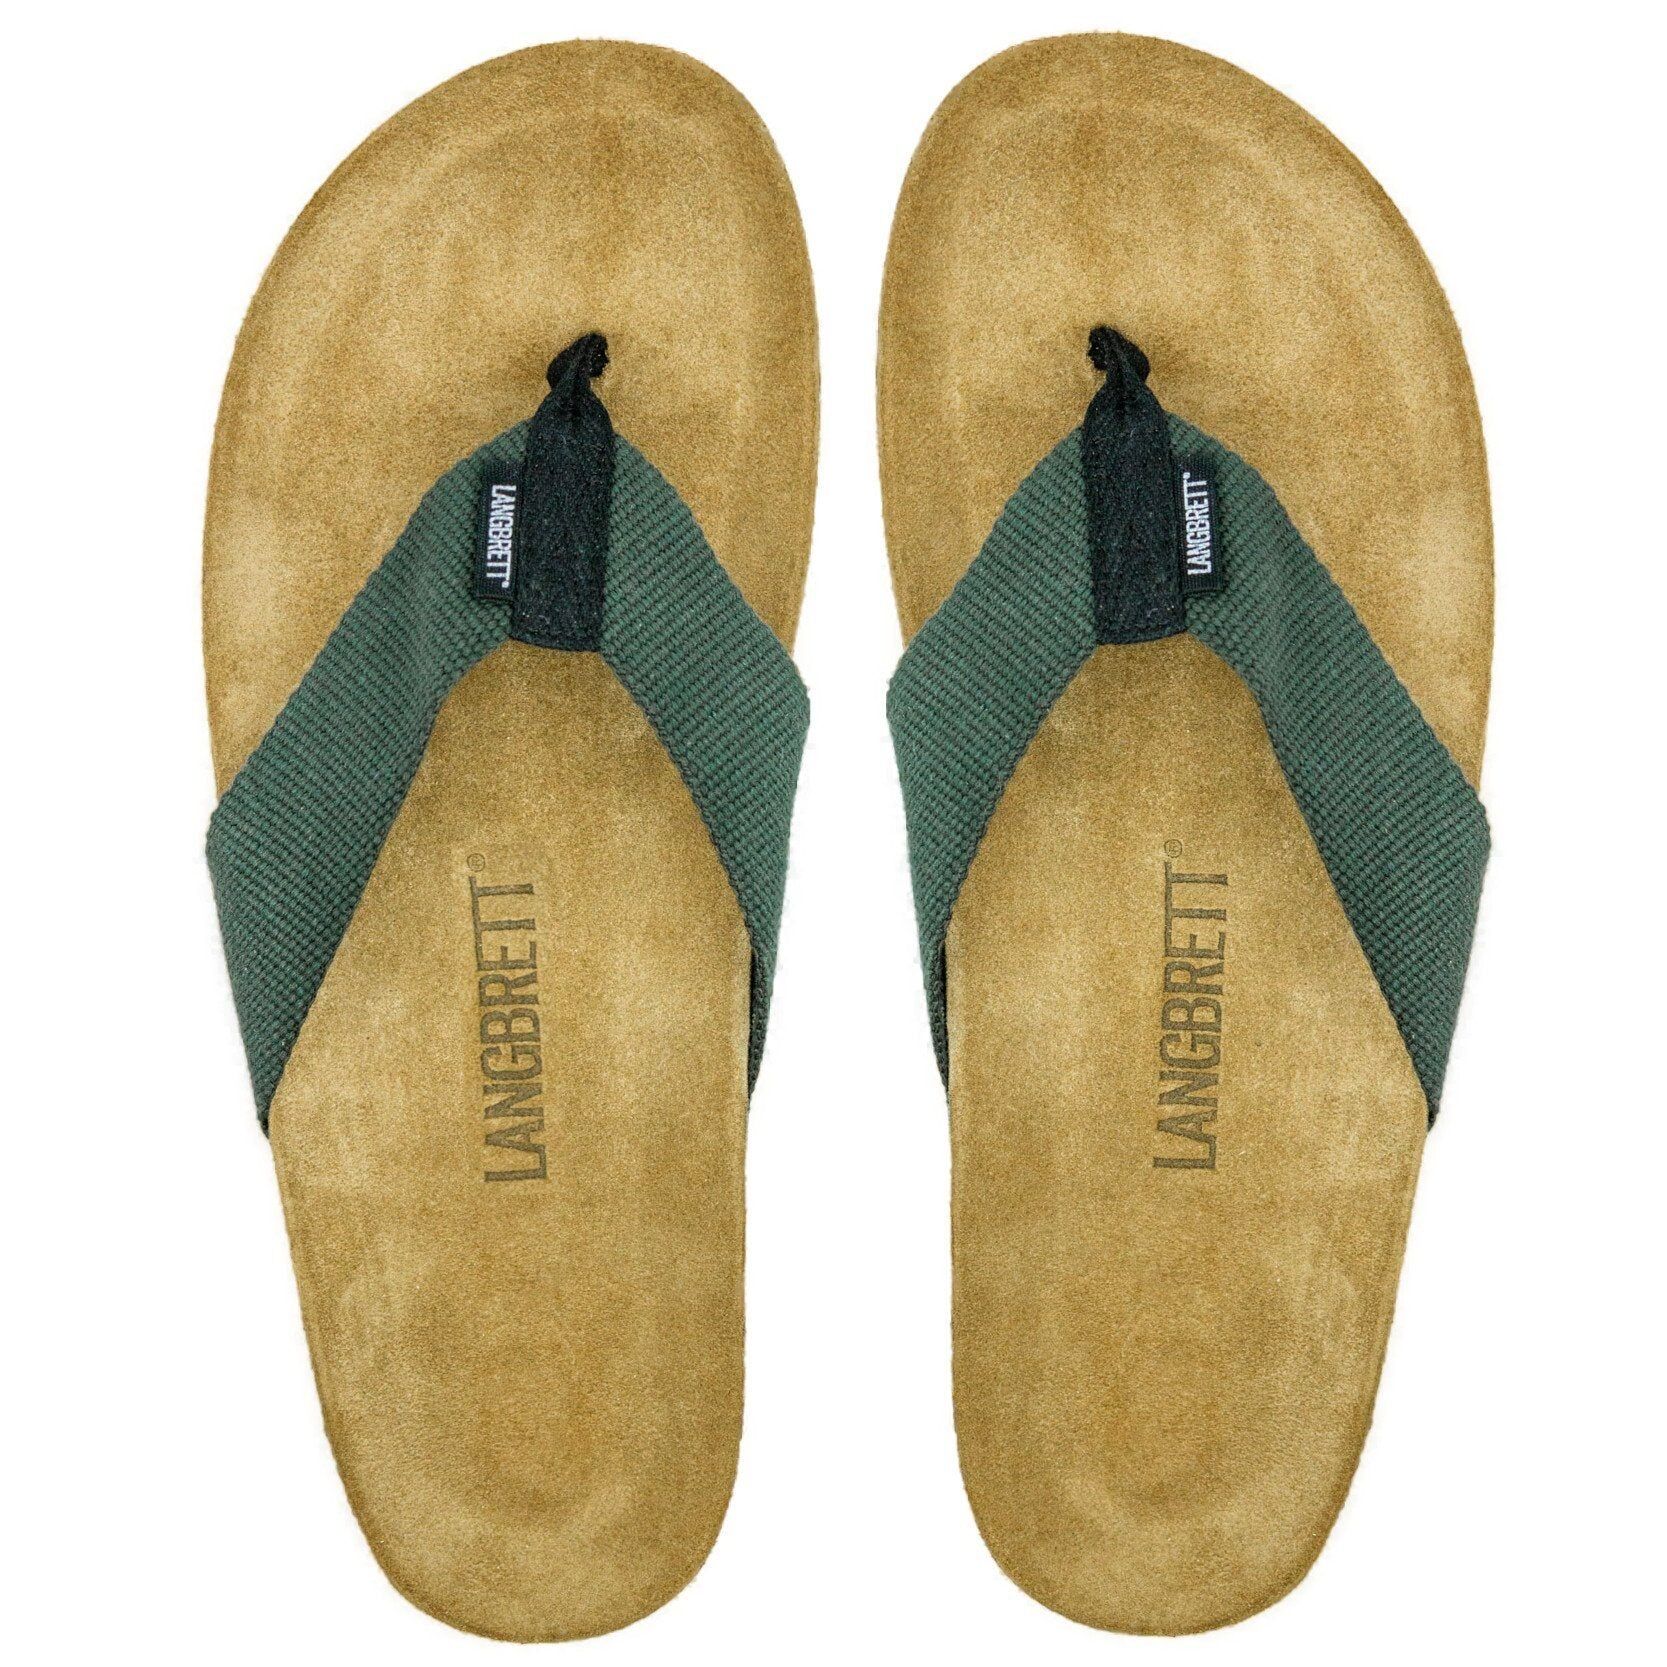 LANGBRETT GUR Ecological sandals, Green / 39